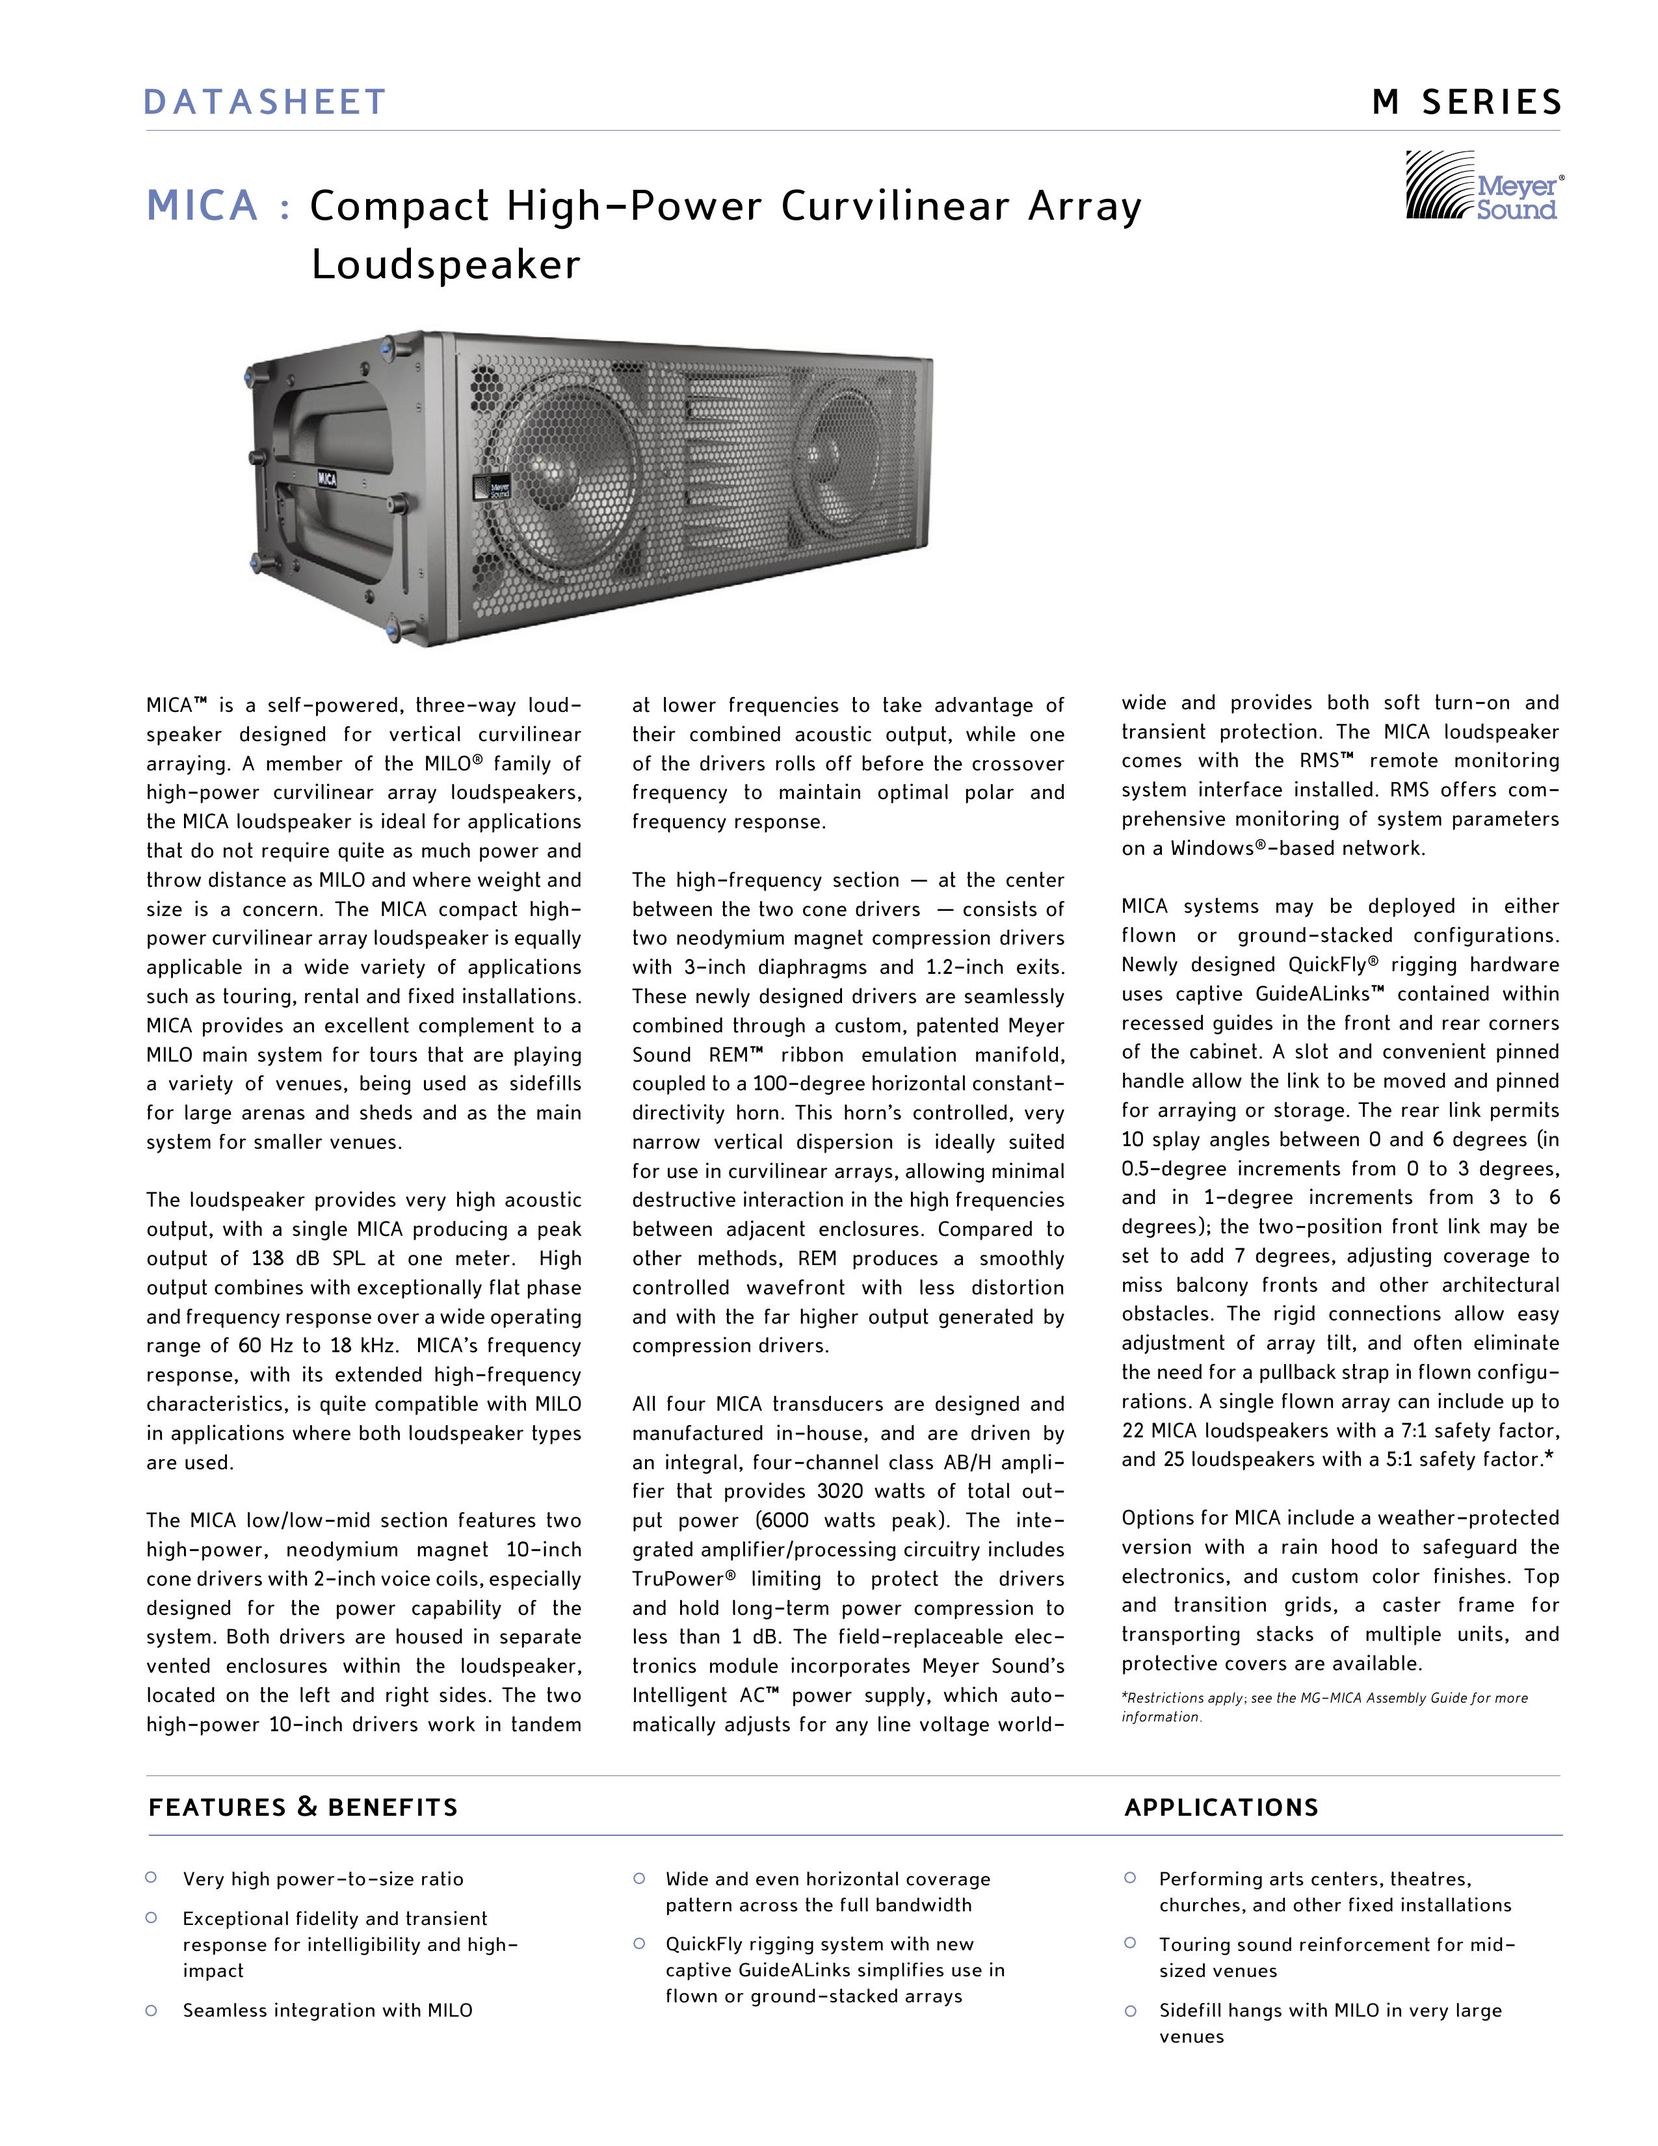 Meyer Sound MICA Portable Speaker User Manual